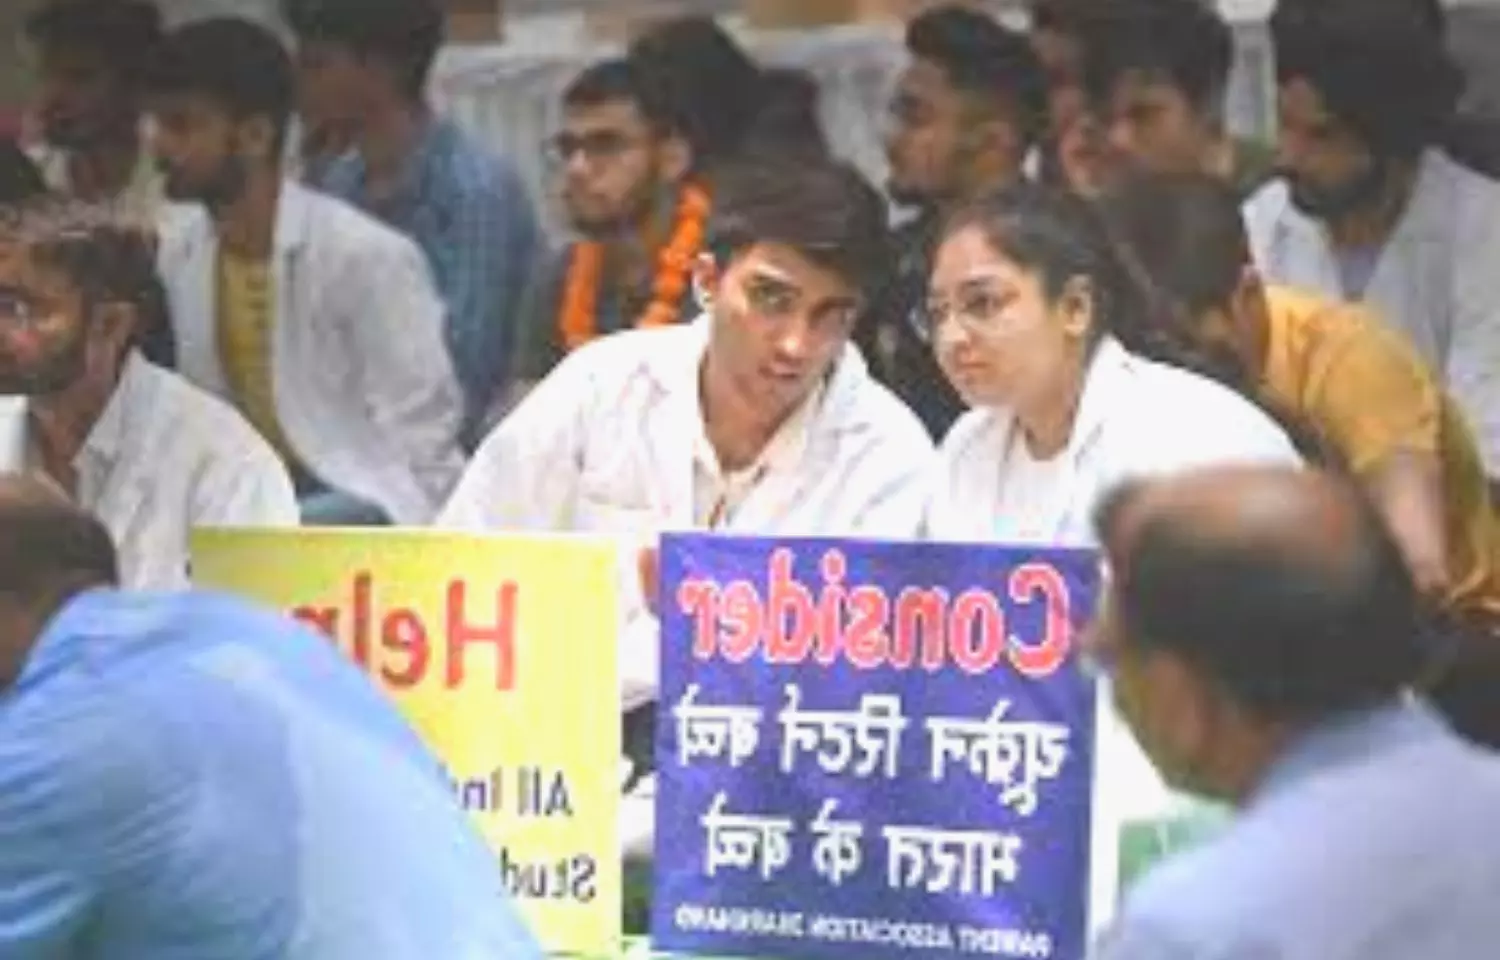 Ukraine returned MBBS students sit on hunger strike seeking admission in Indian medical colleges